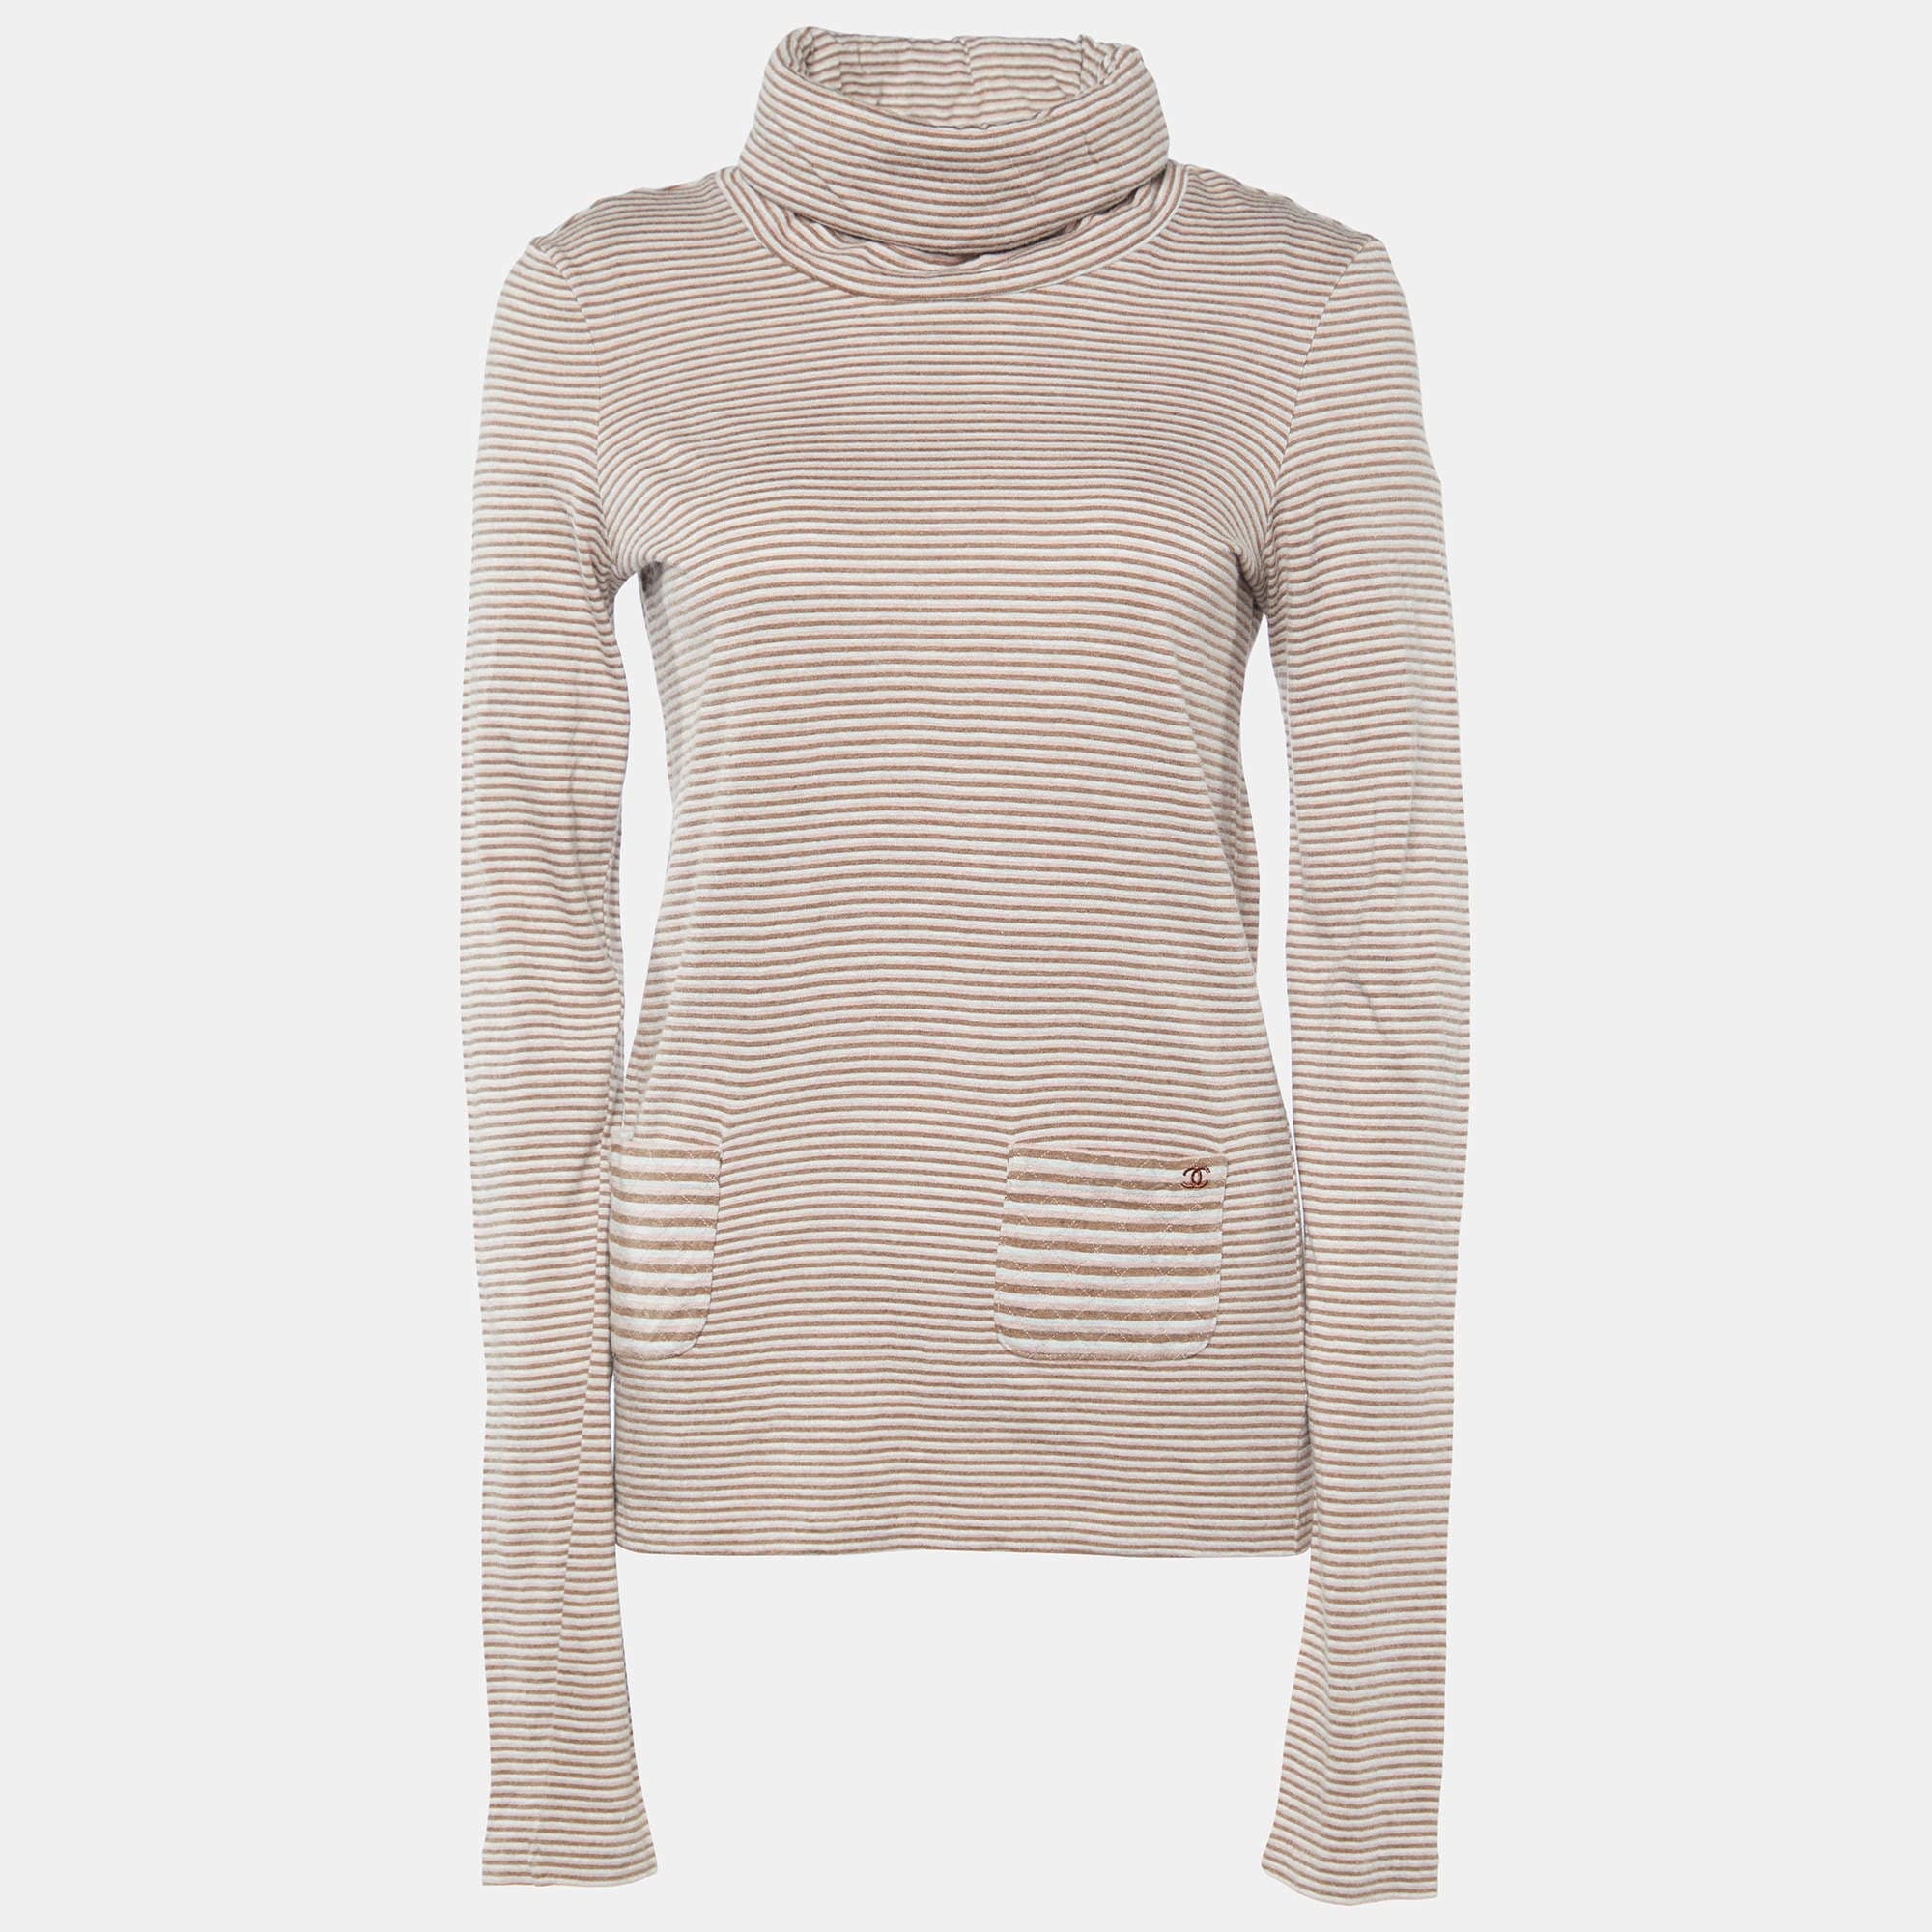 Chanel Chanel Cotton & Angora Knit Turtleneck Sweater M ASCLC2399